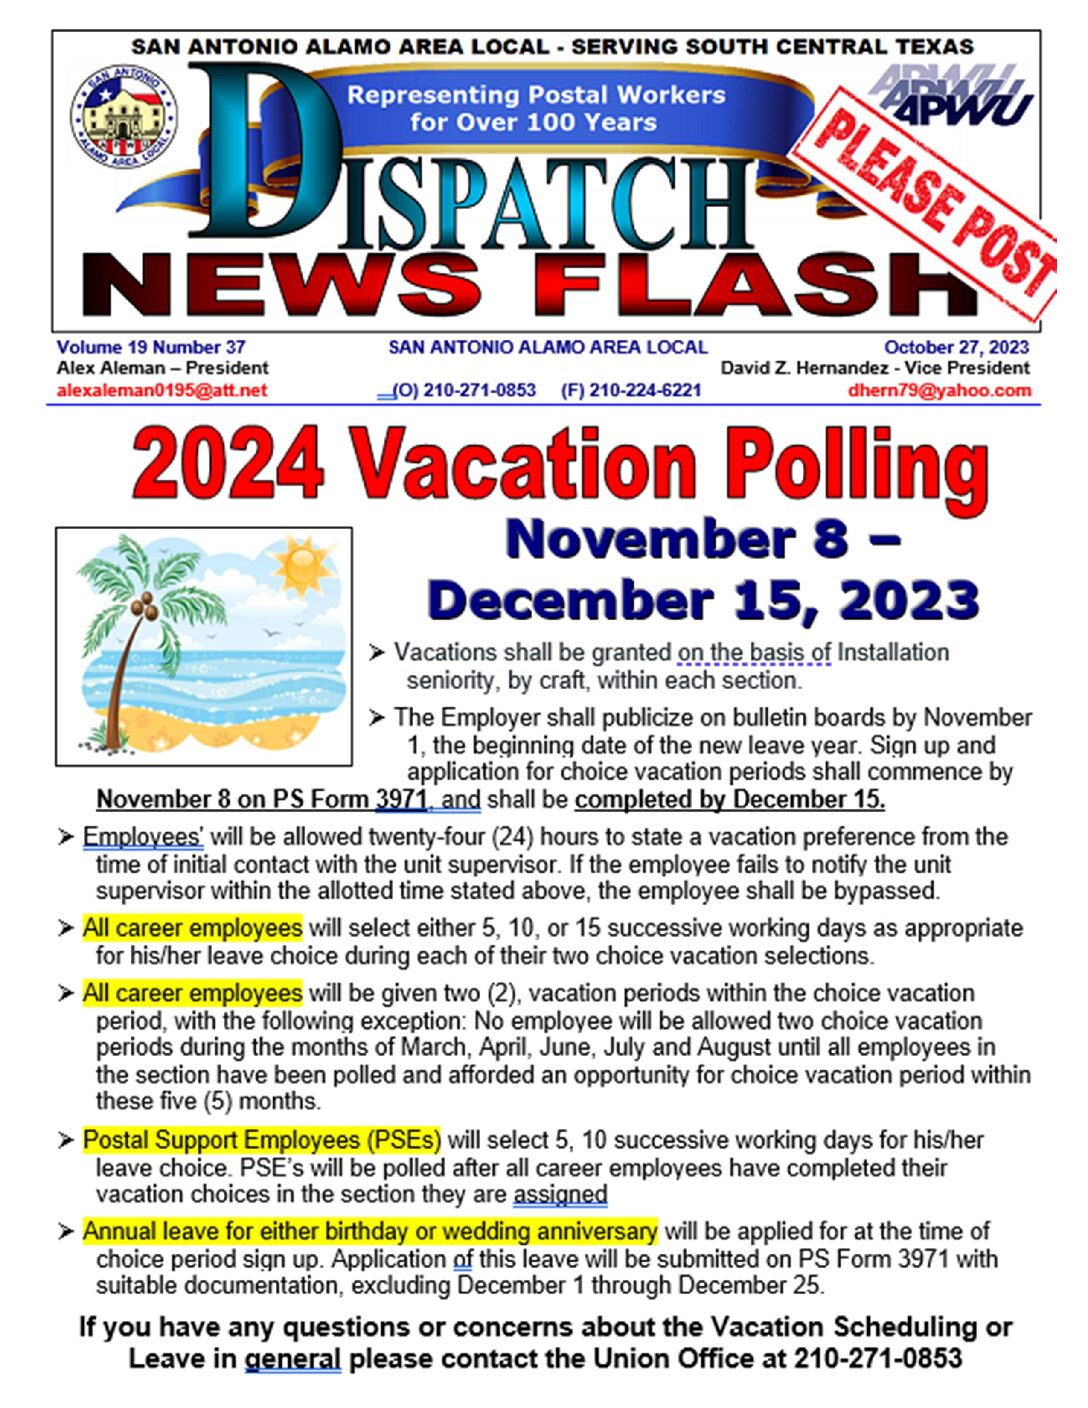 NewsFlash 19-37 2024 Vacation Polling - 